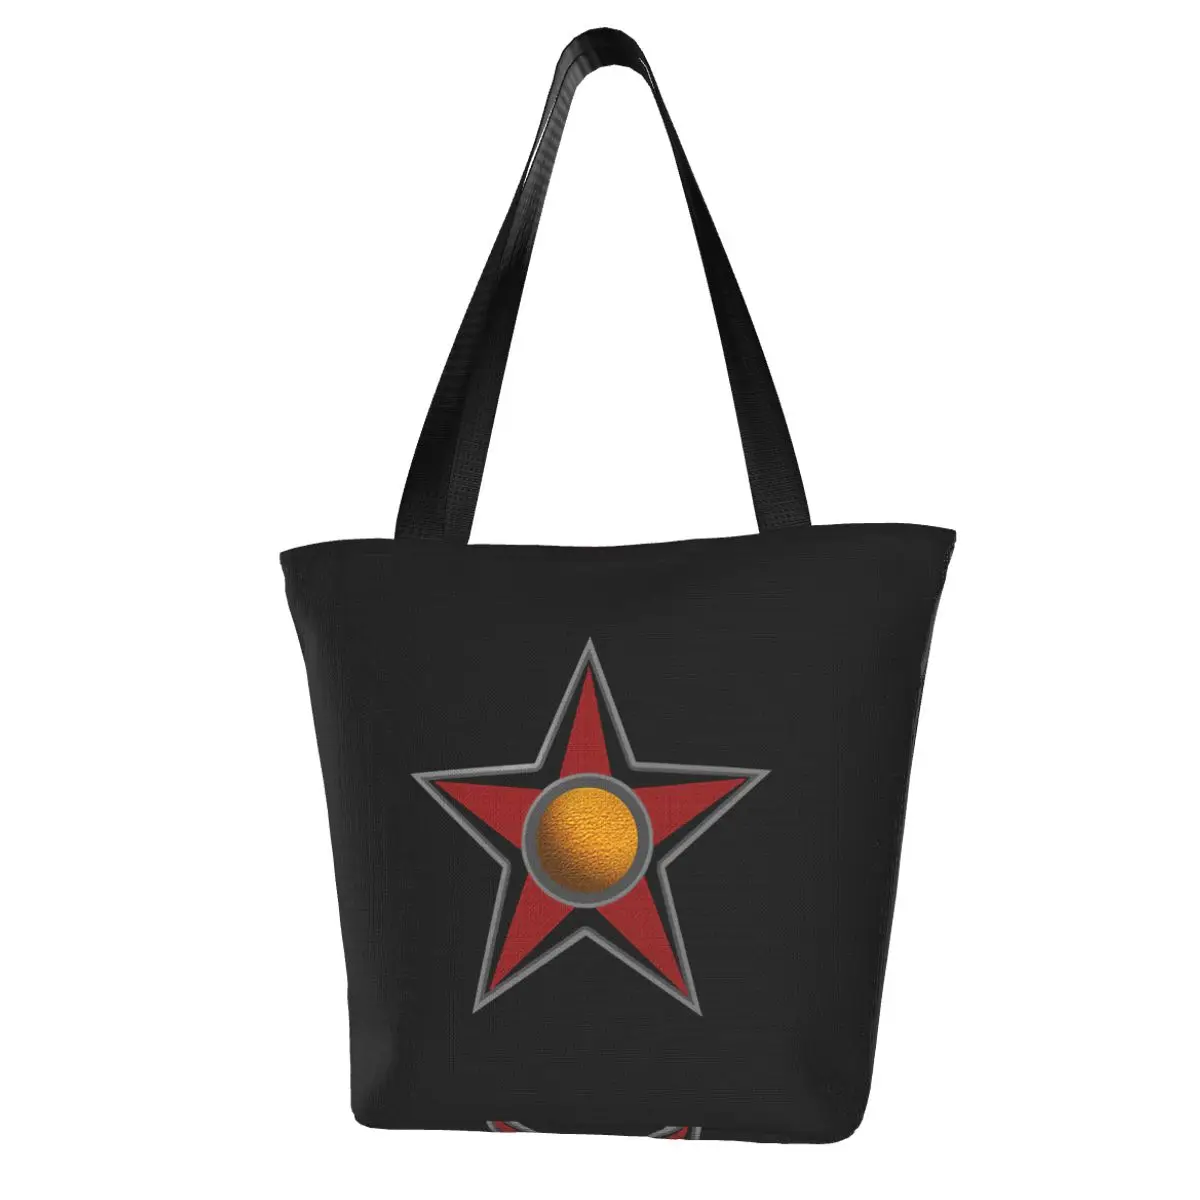 Star Shopping Bag Aesthetic Cloth Outdoor Handbag Female Fashion Bags